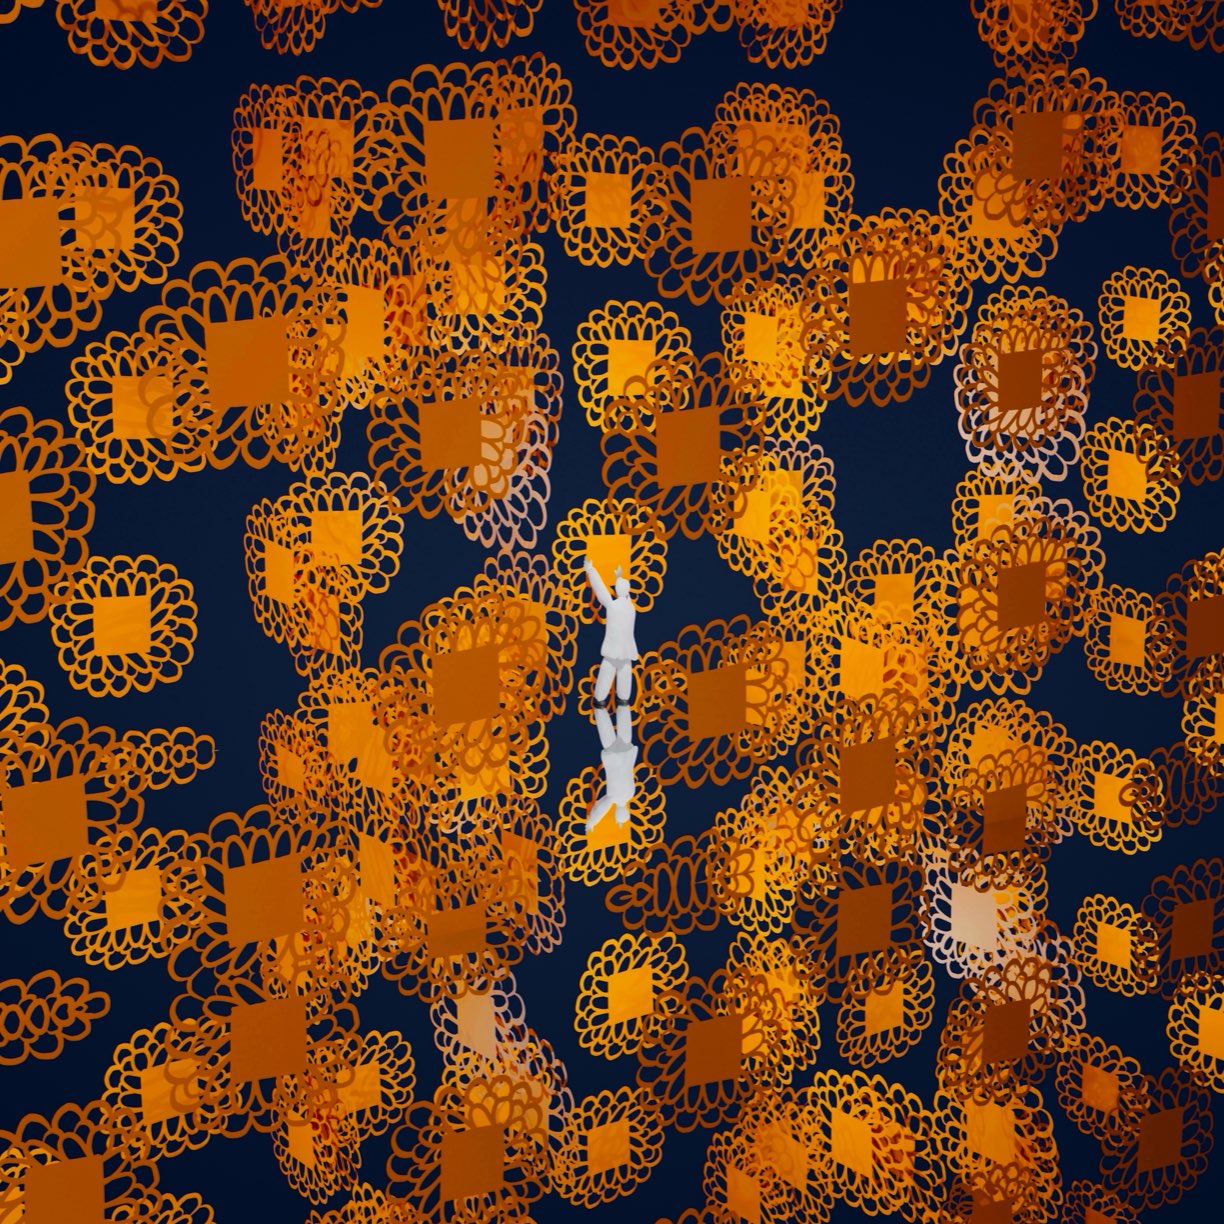 Atsushigraphの作品「Flower Pixel」の画像です。